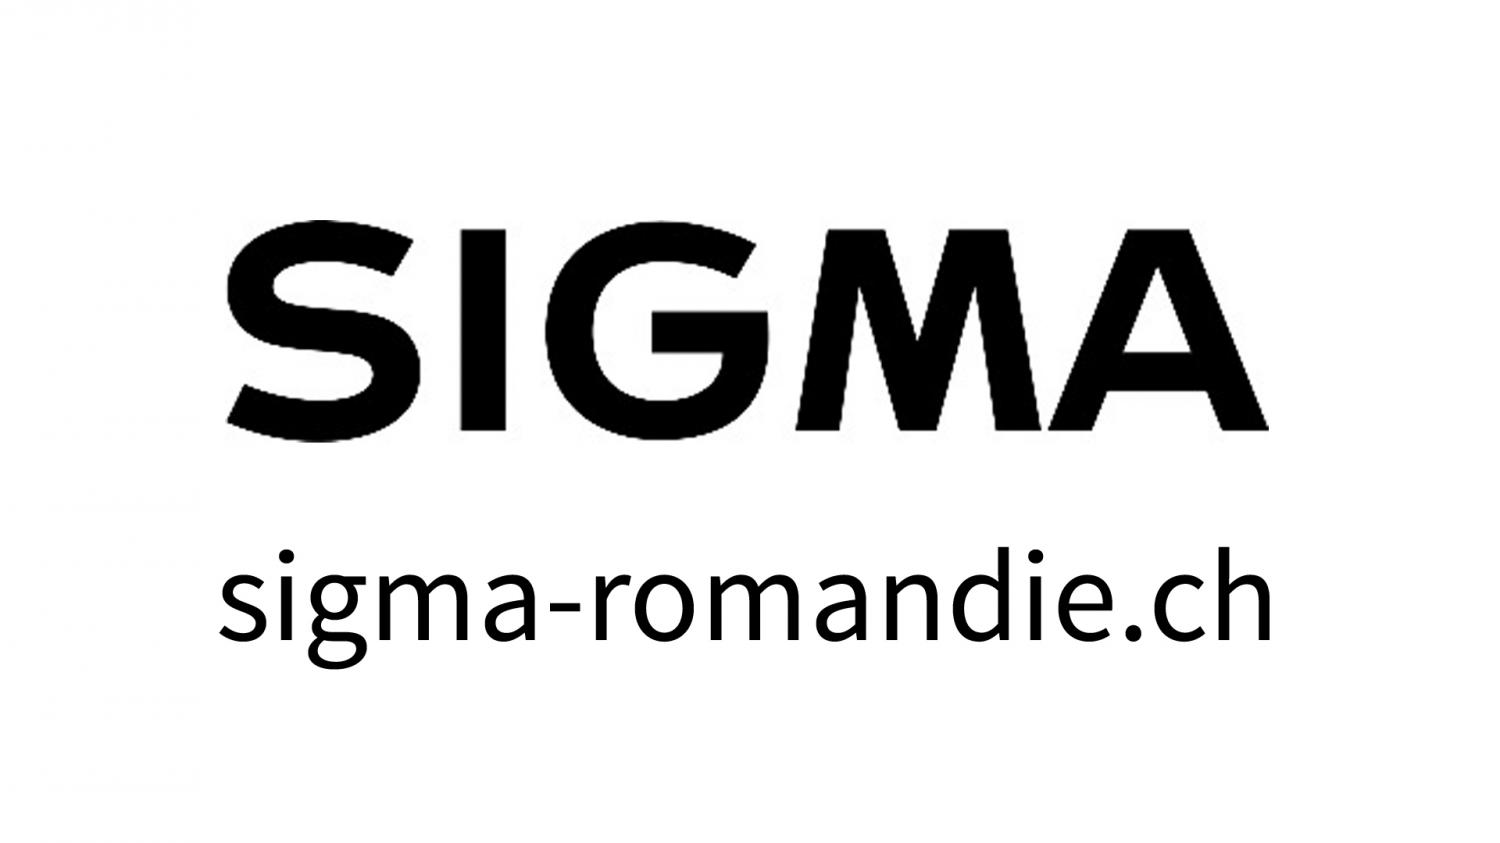 image-7298995-SIGMA romandie logo minu.jpg